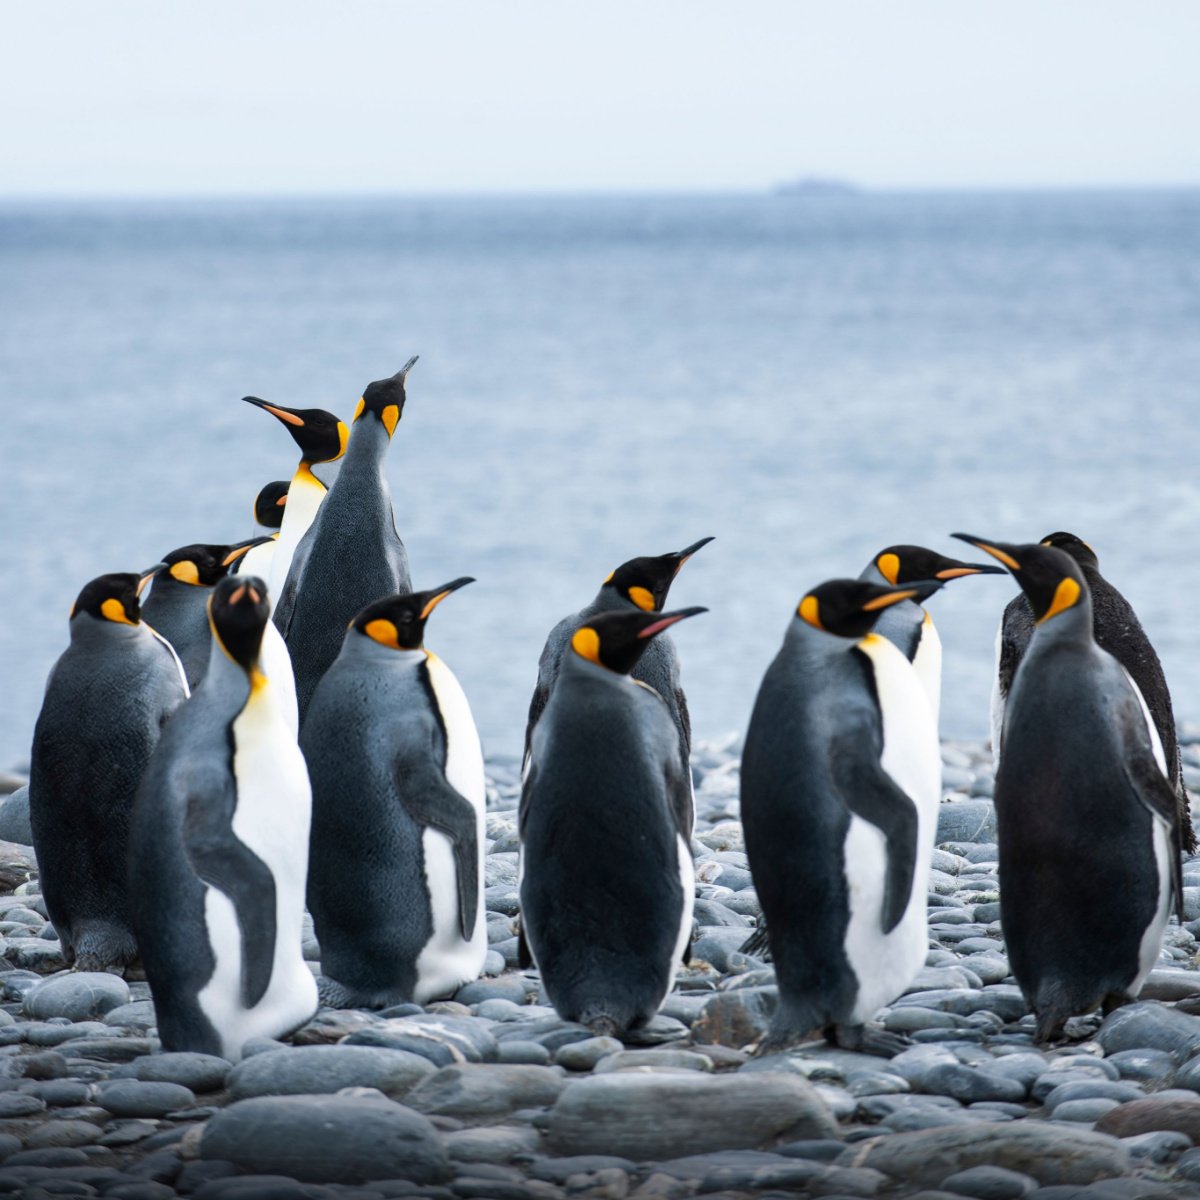 penguins resting on a rocky shoreline